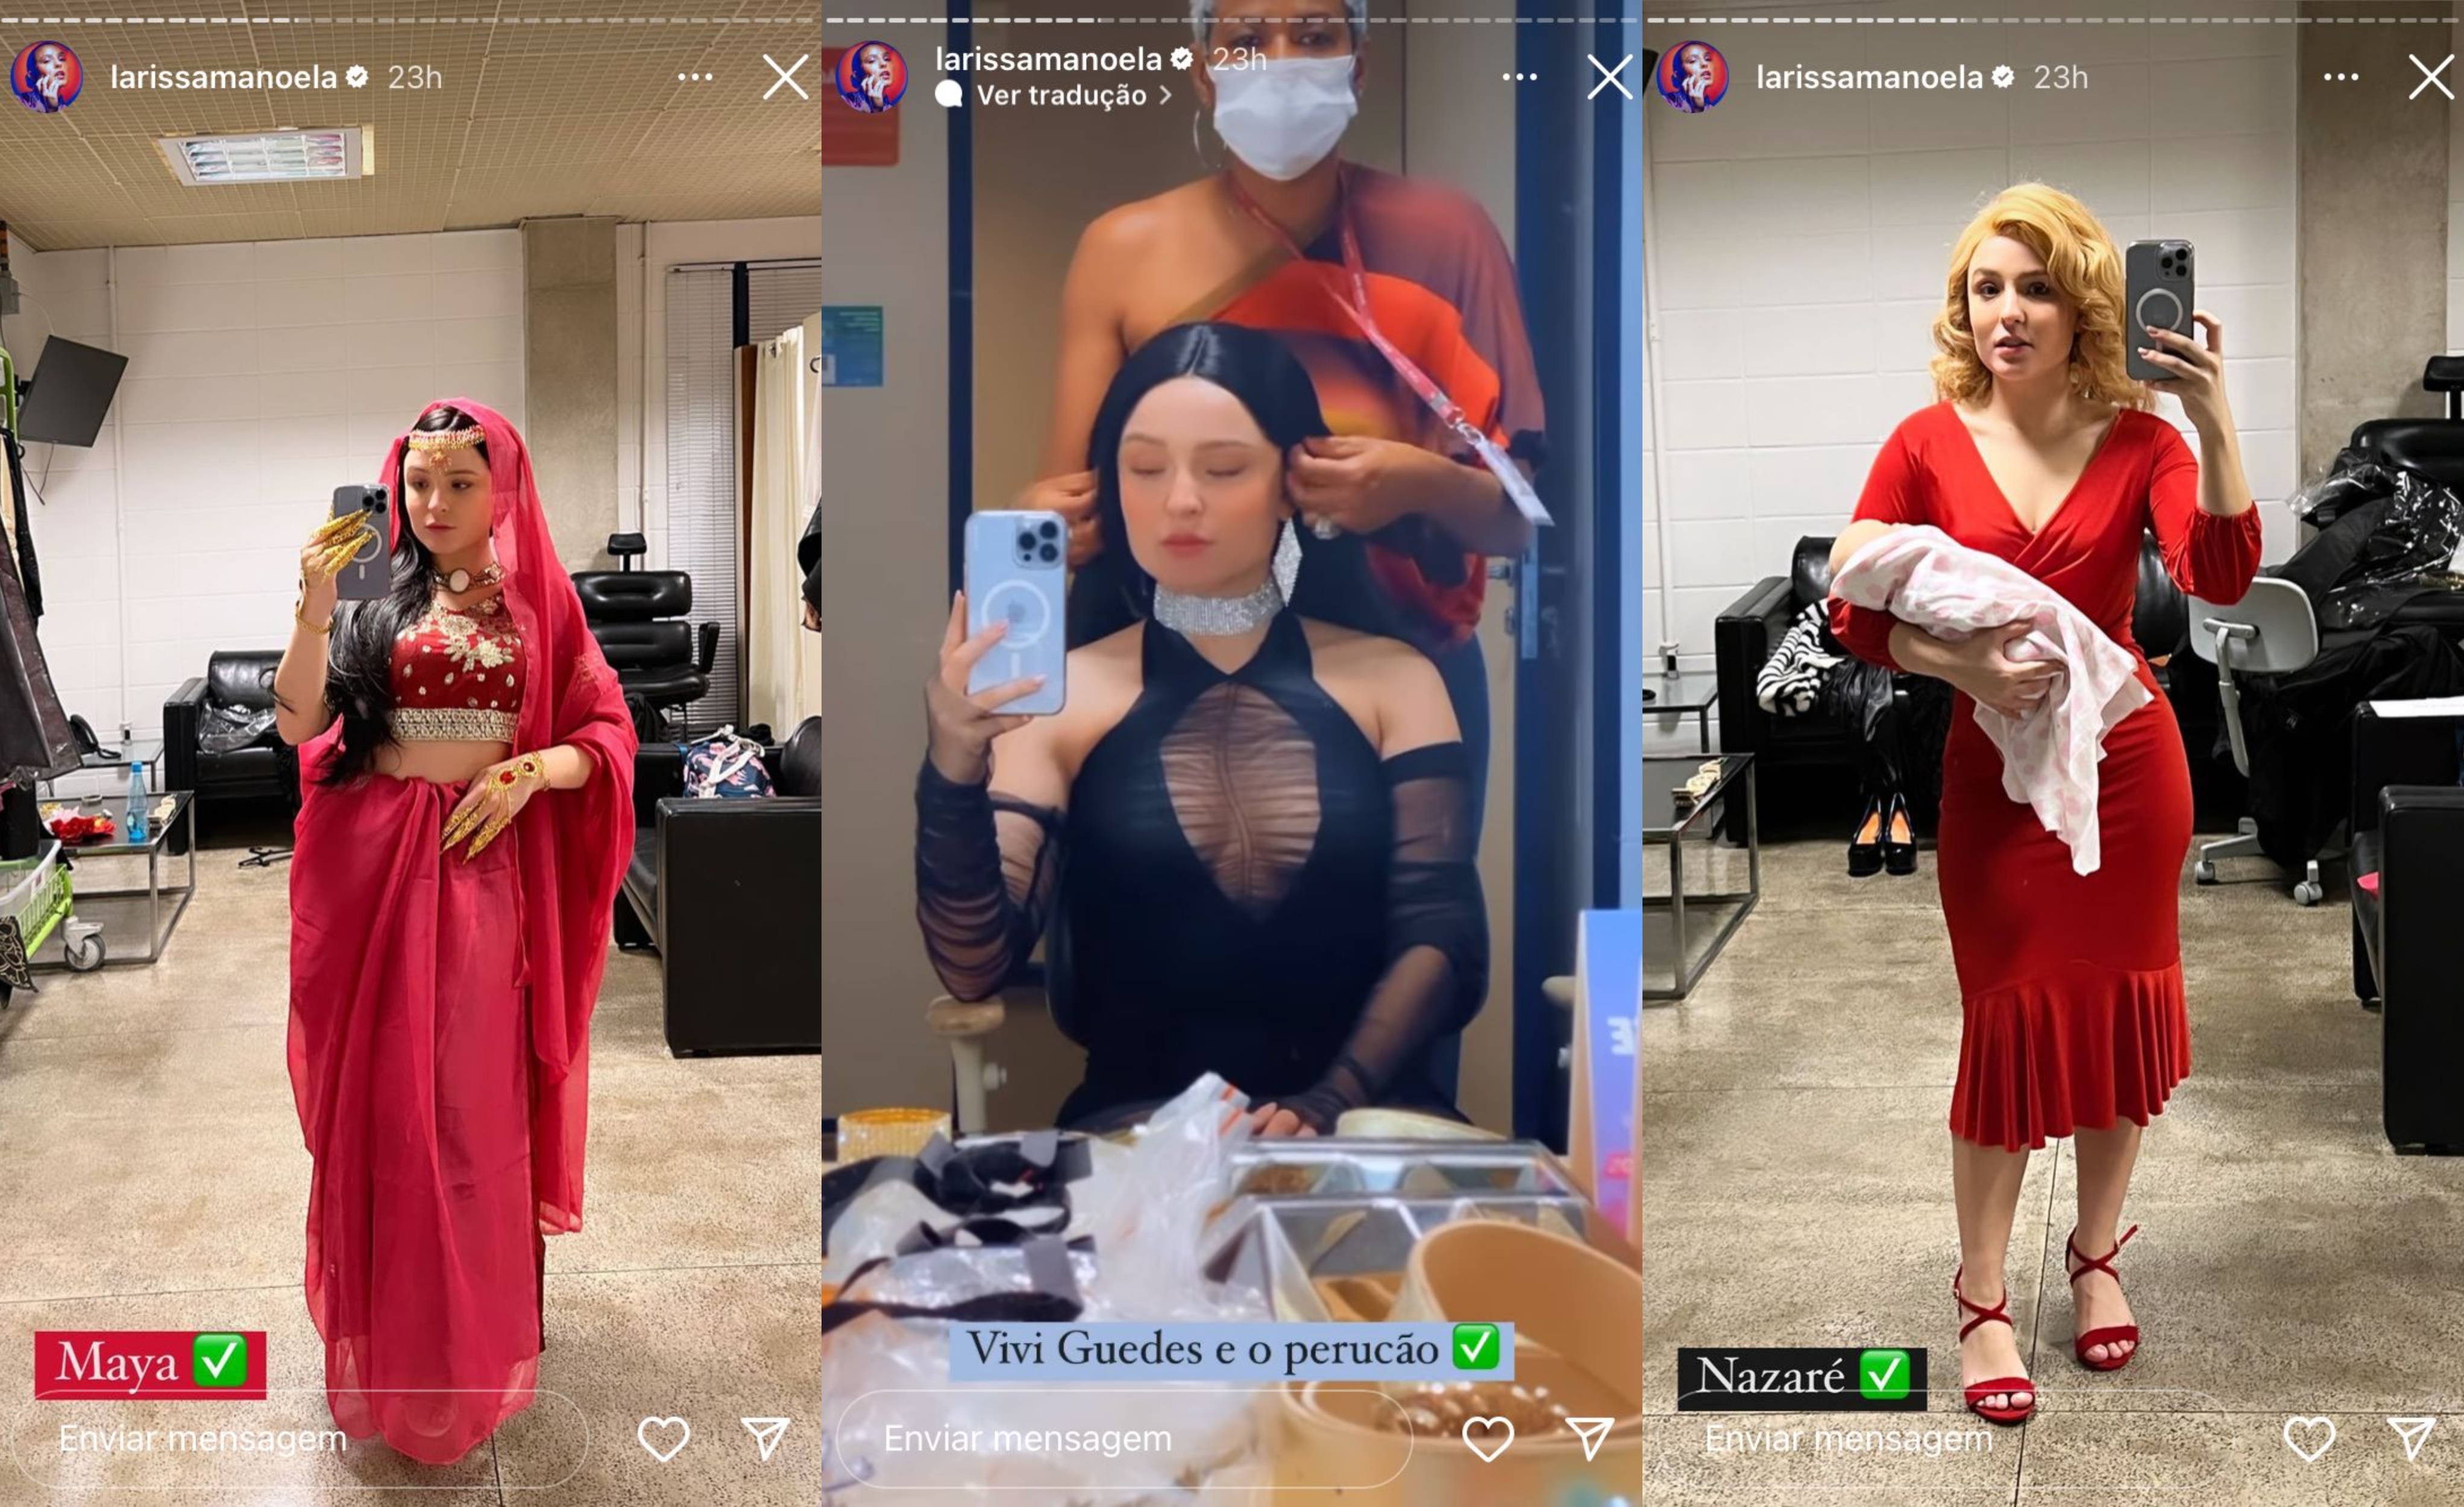 Larissa Manoela como Maya, Vivi Guedes e Nazaré - Instagram/@larissamanoela